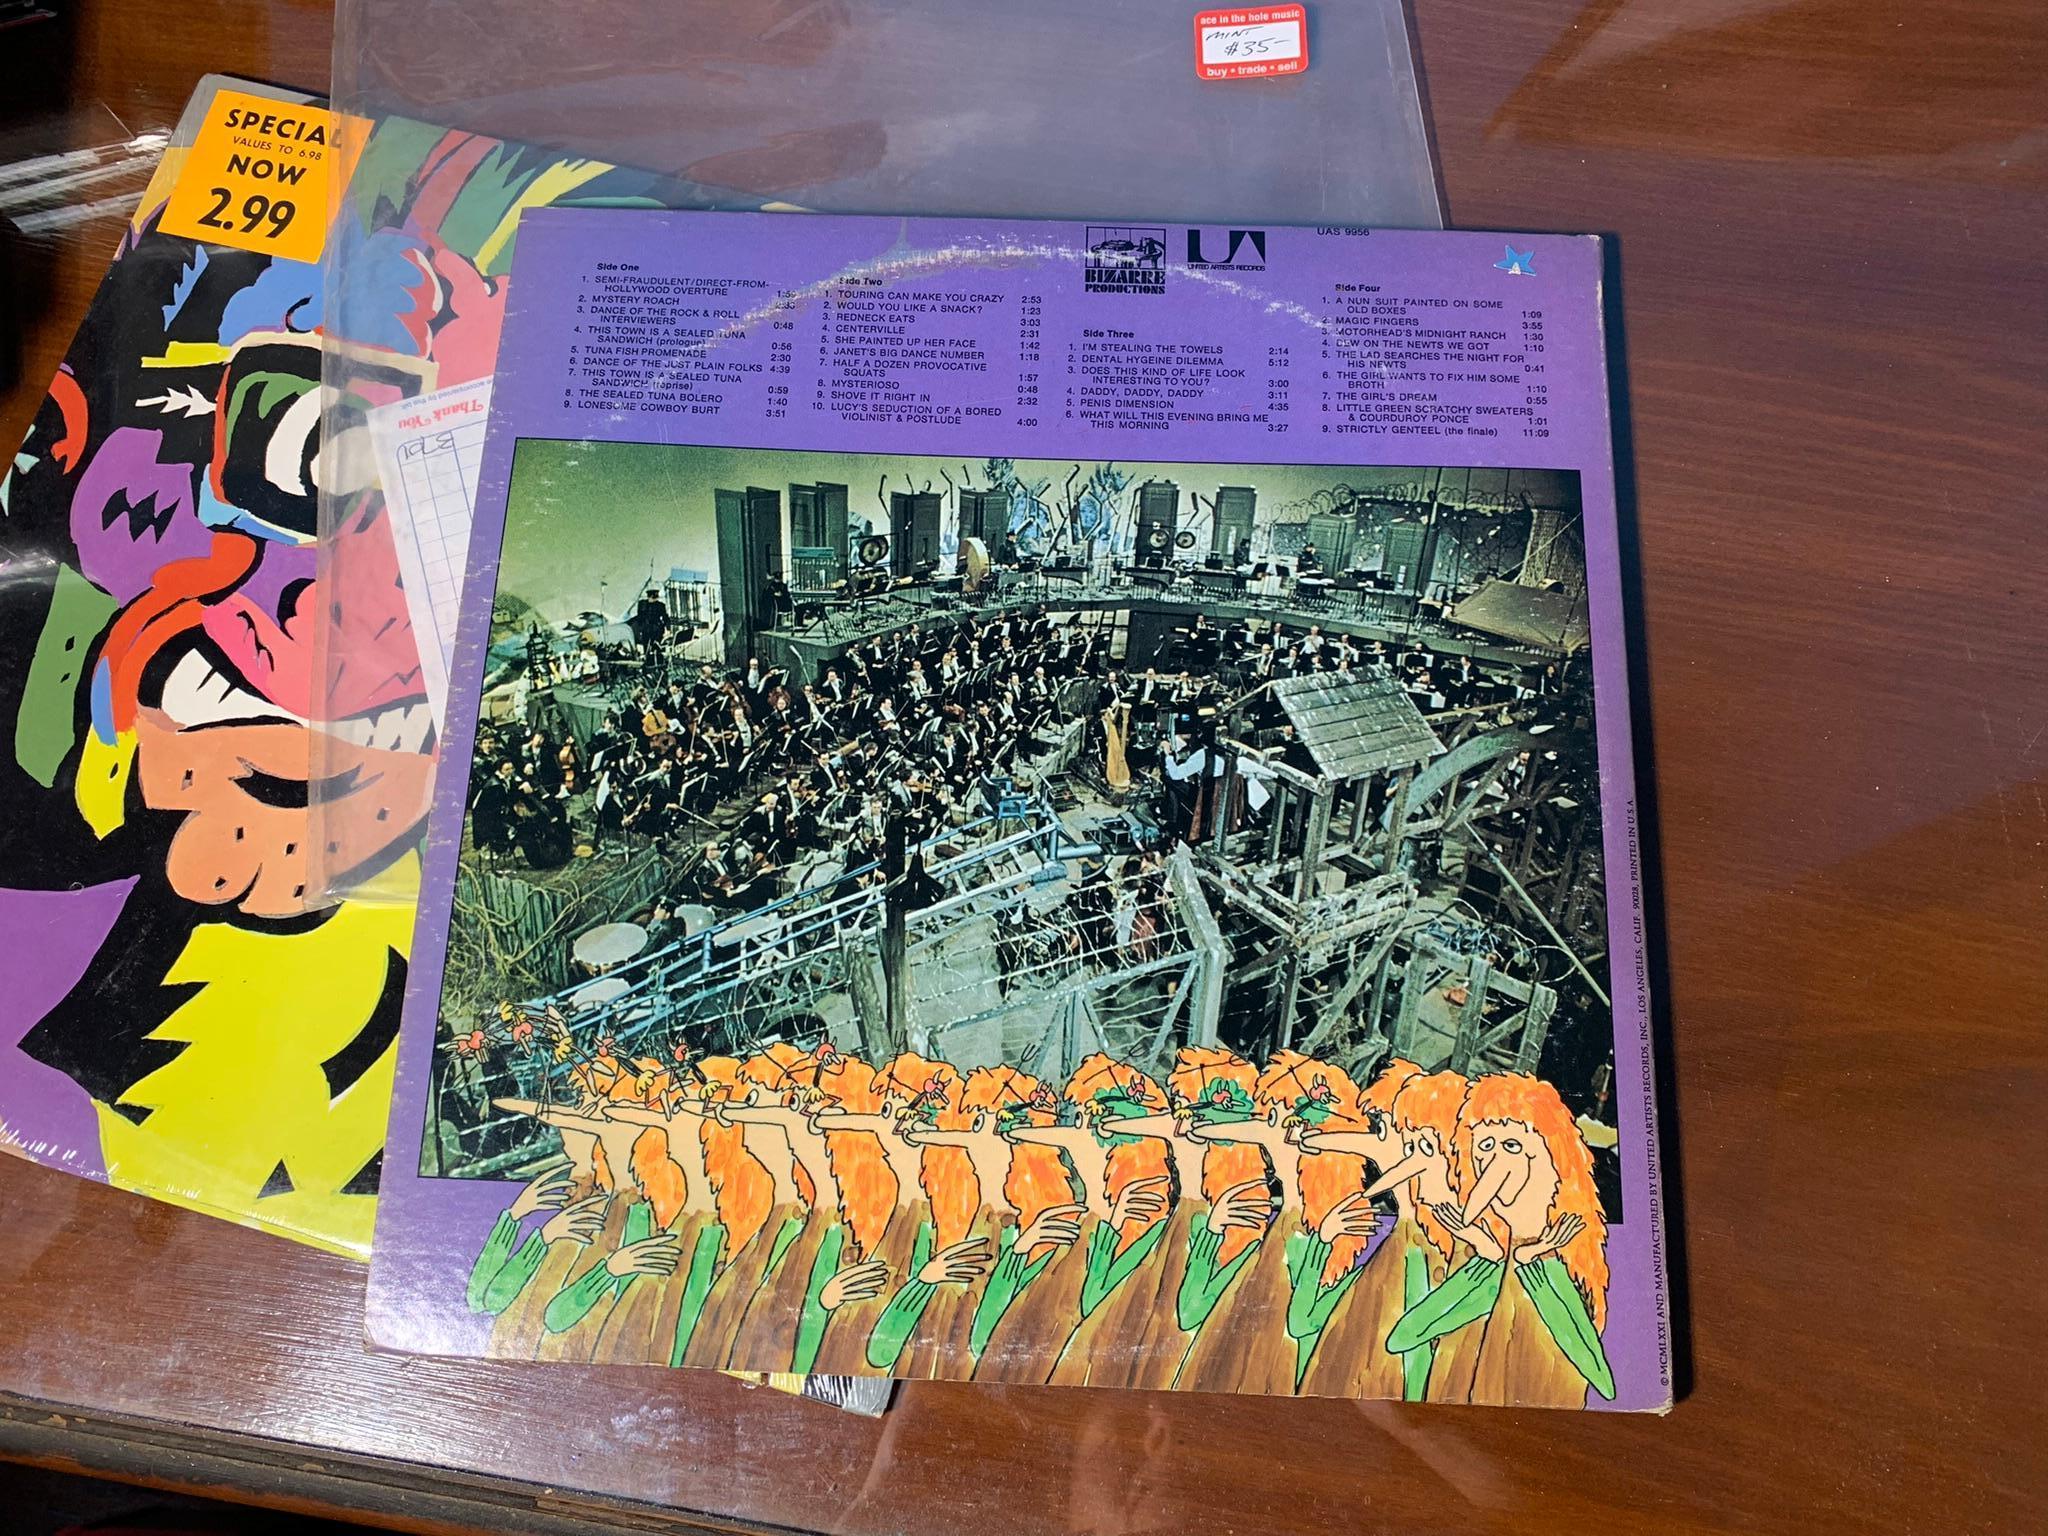 Frank Zappa Records & CDs